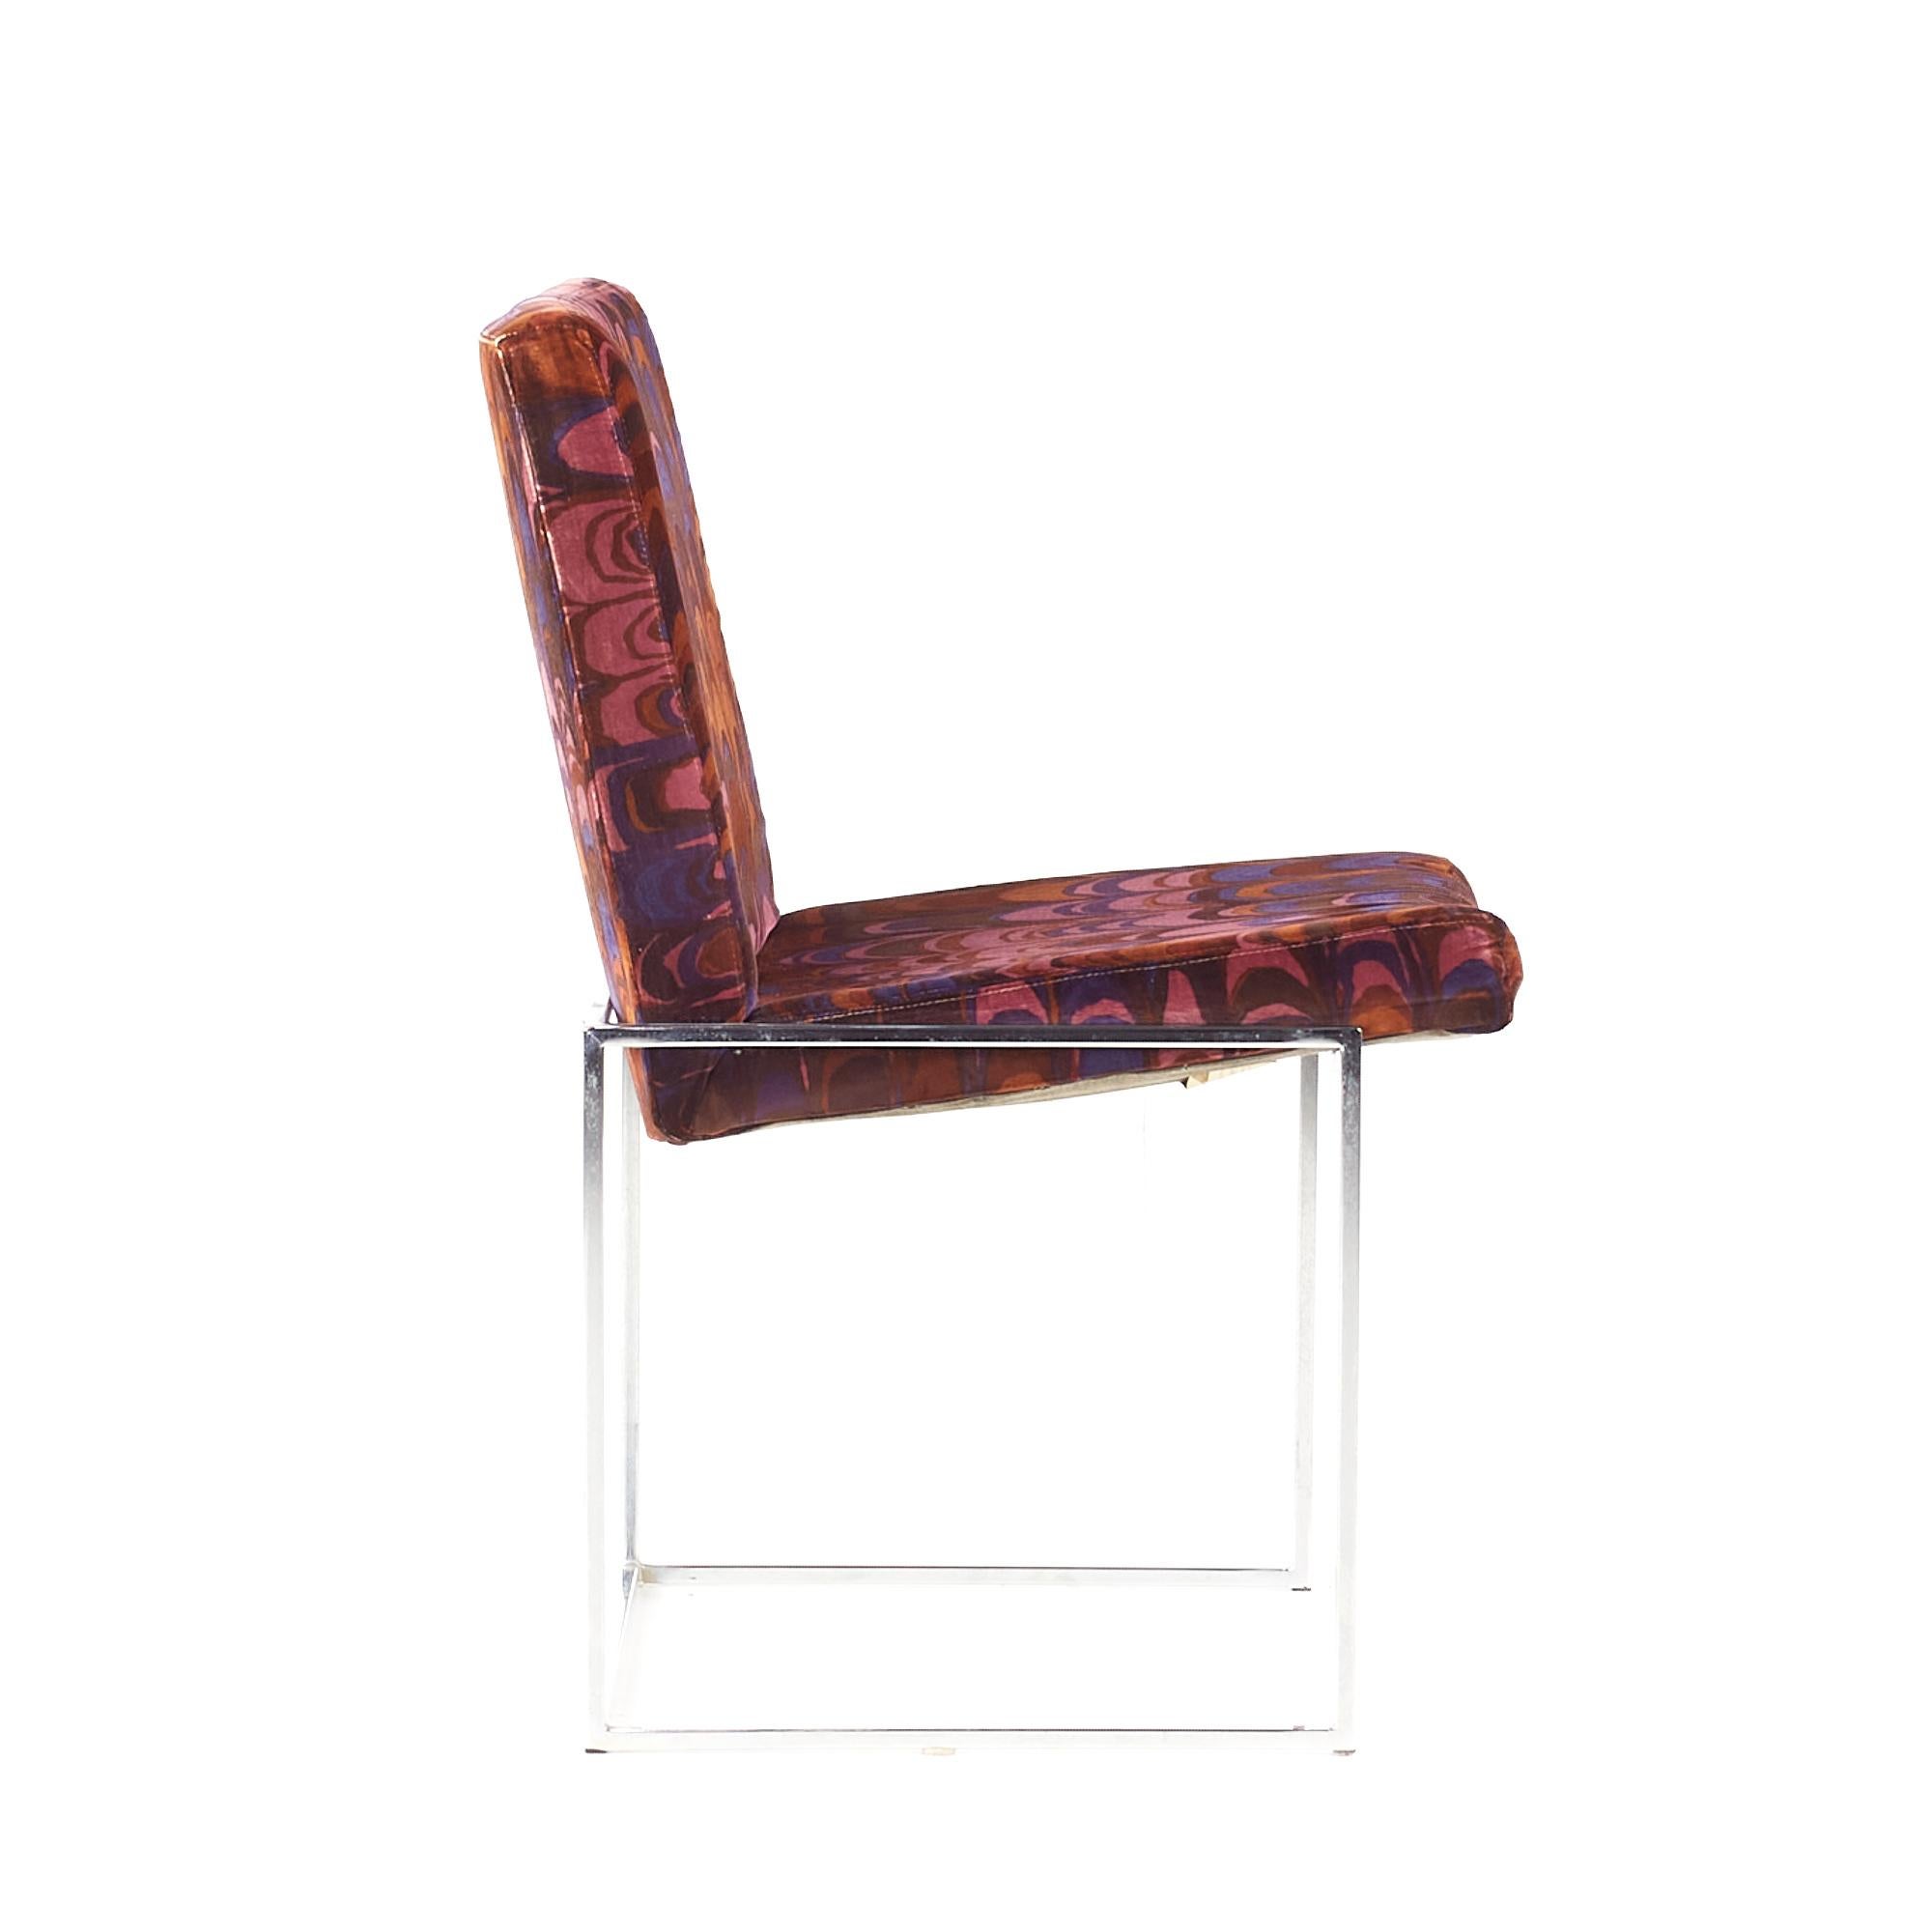 Upholstery Jack Lenor Larsen Mid Century Square Chrome Framed Dining Chairs, Set of 4 For Sale